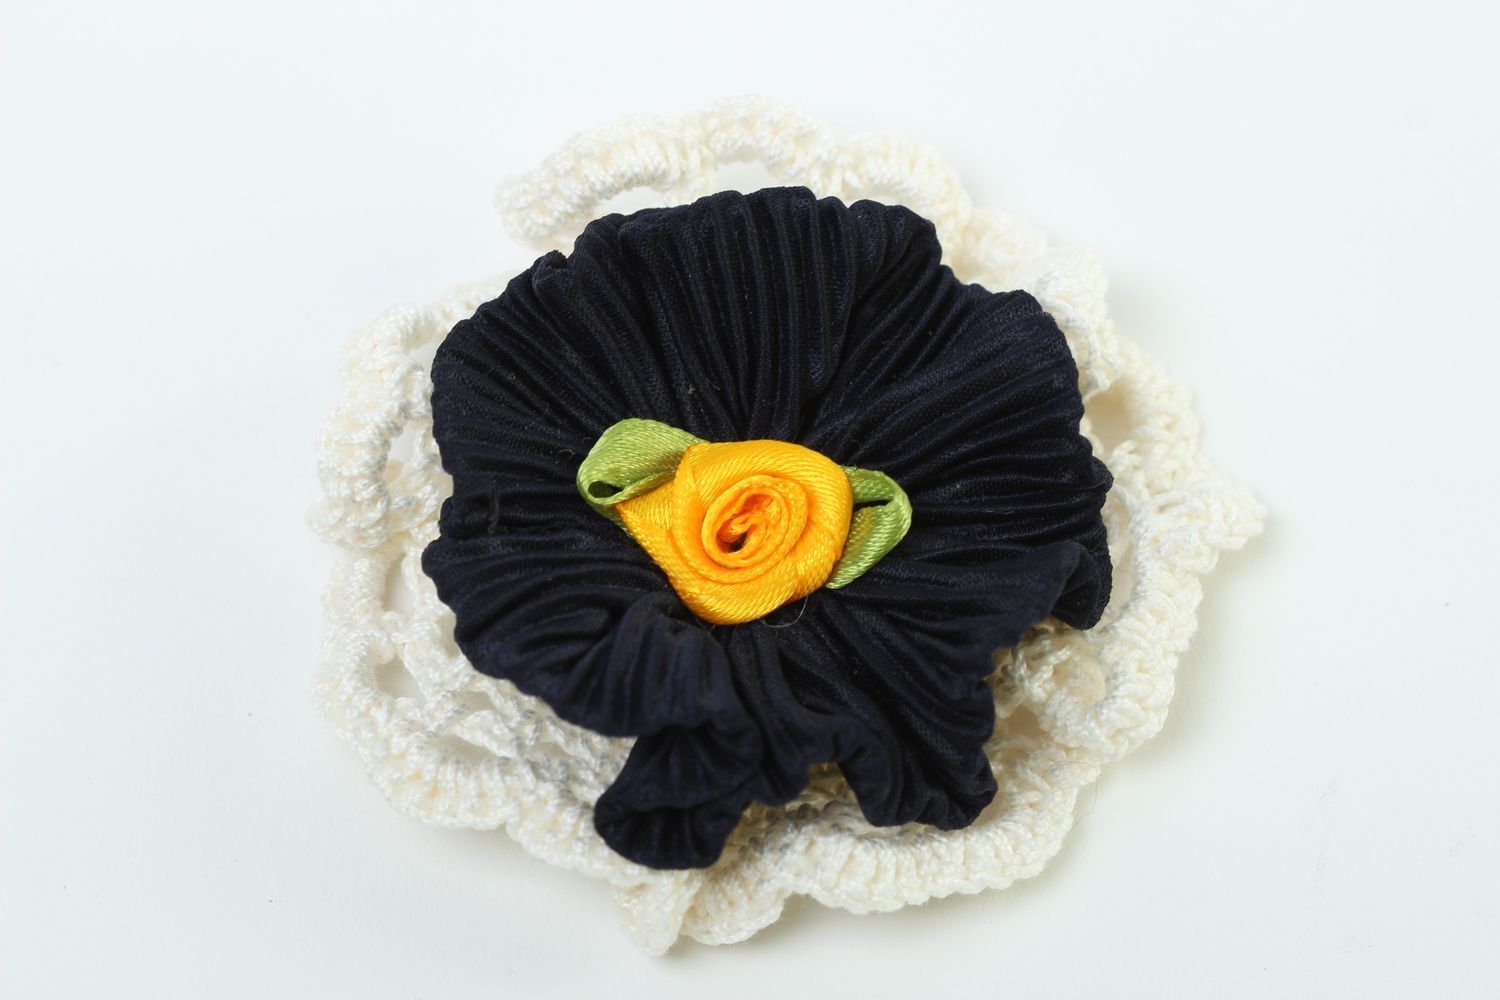 Handmade crochet flower decorative flowers jewelry craft supplies crochet ideas photo 2